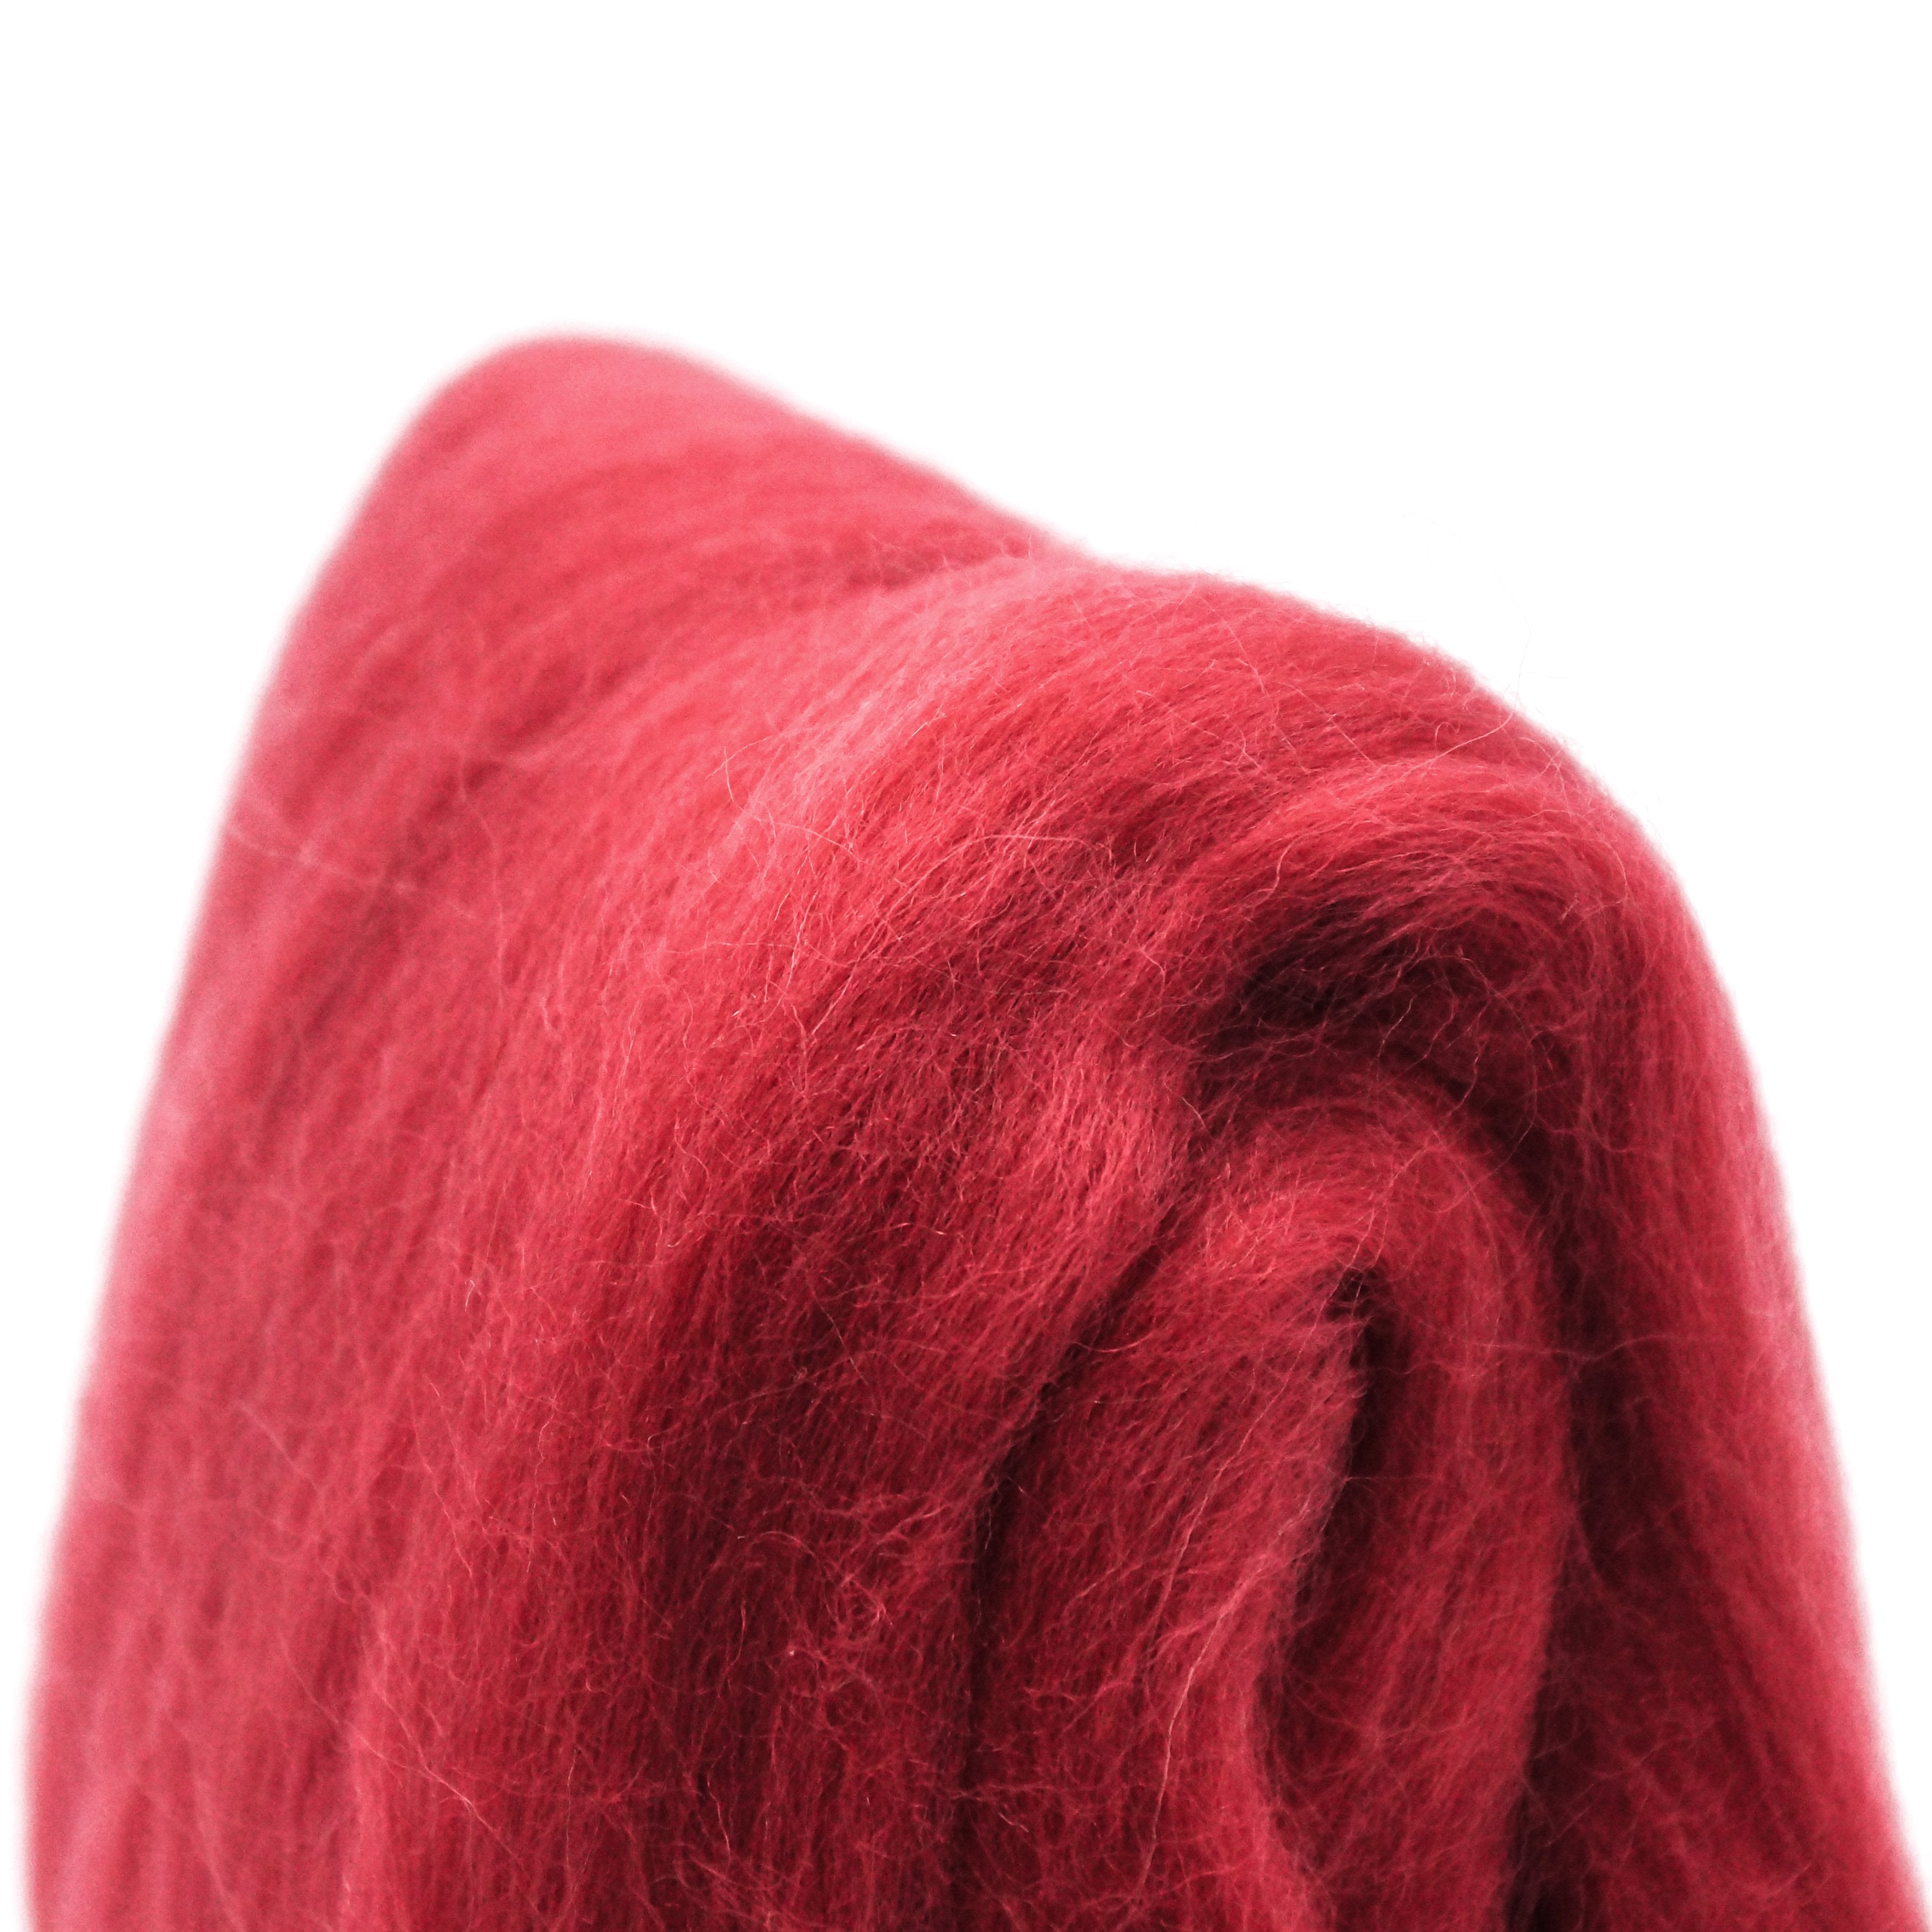 Free Shipping Autumn Red Brown Handmade Merino Roving Wool Hand Spinni –  Imagina Natural